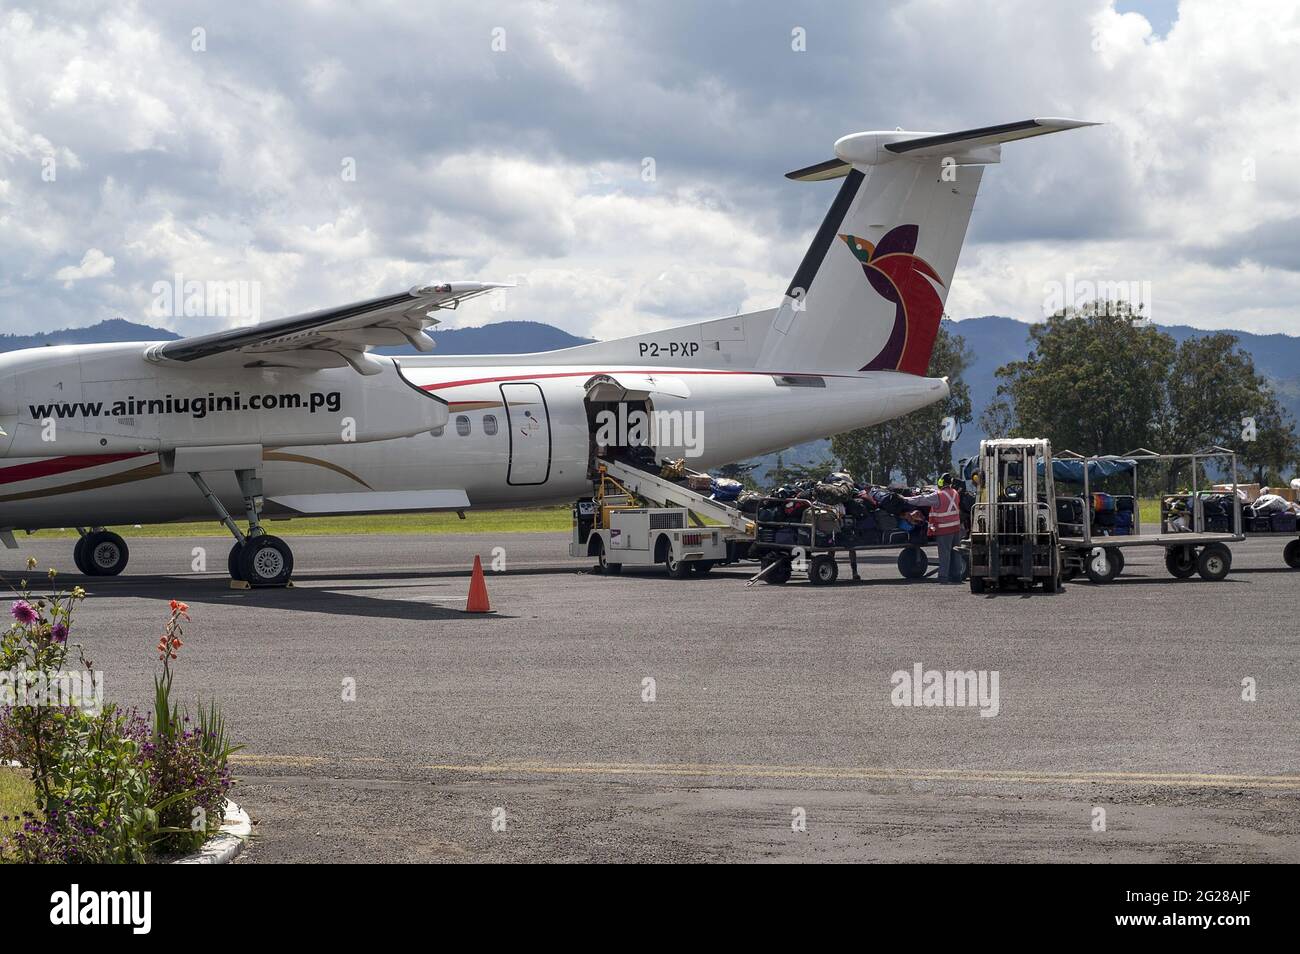 Papua New Guinea, Goroka - airport; The plane on the tarmac. Loading luggage on the plane. Lotnisko, samolot, bagaż; Flughafen Stock Photo